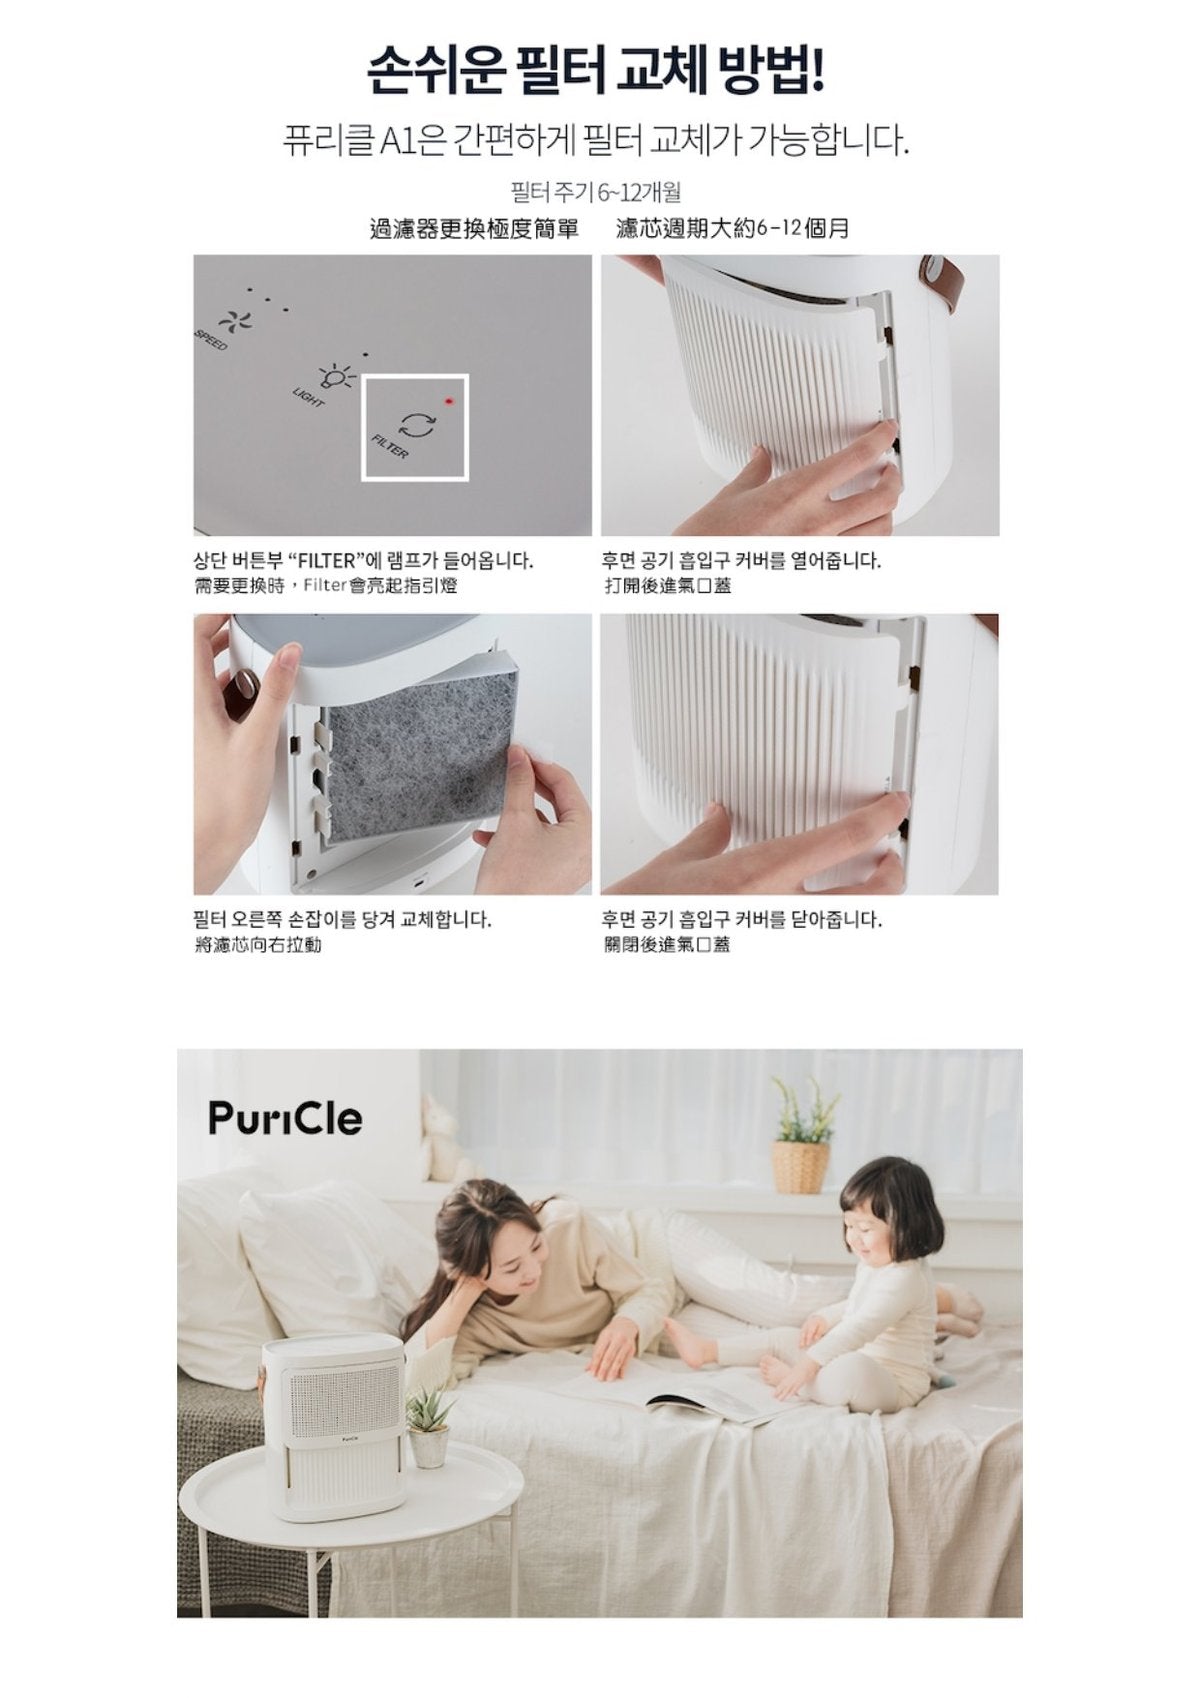 ATECH - 韓國 Puricle A1 便攜式空氣淨化機【香港行貨】